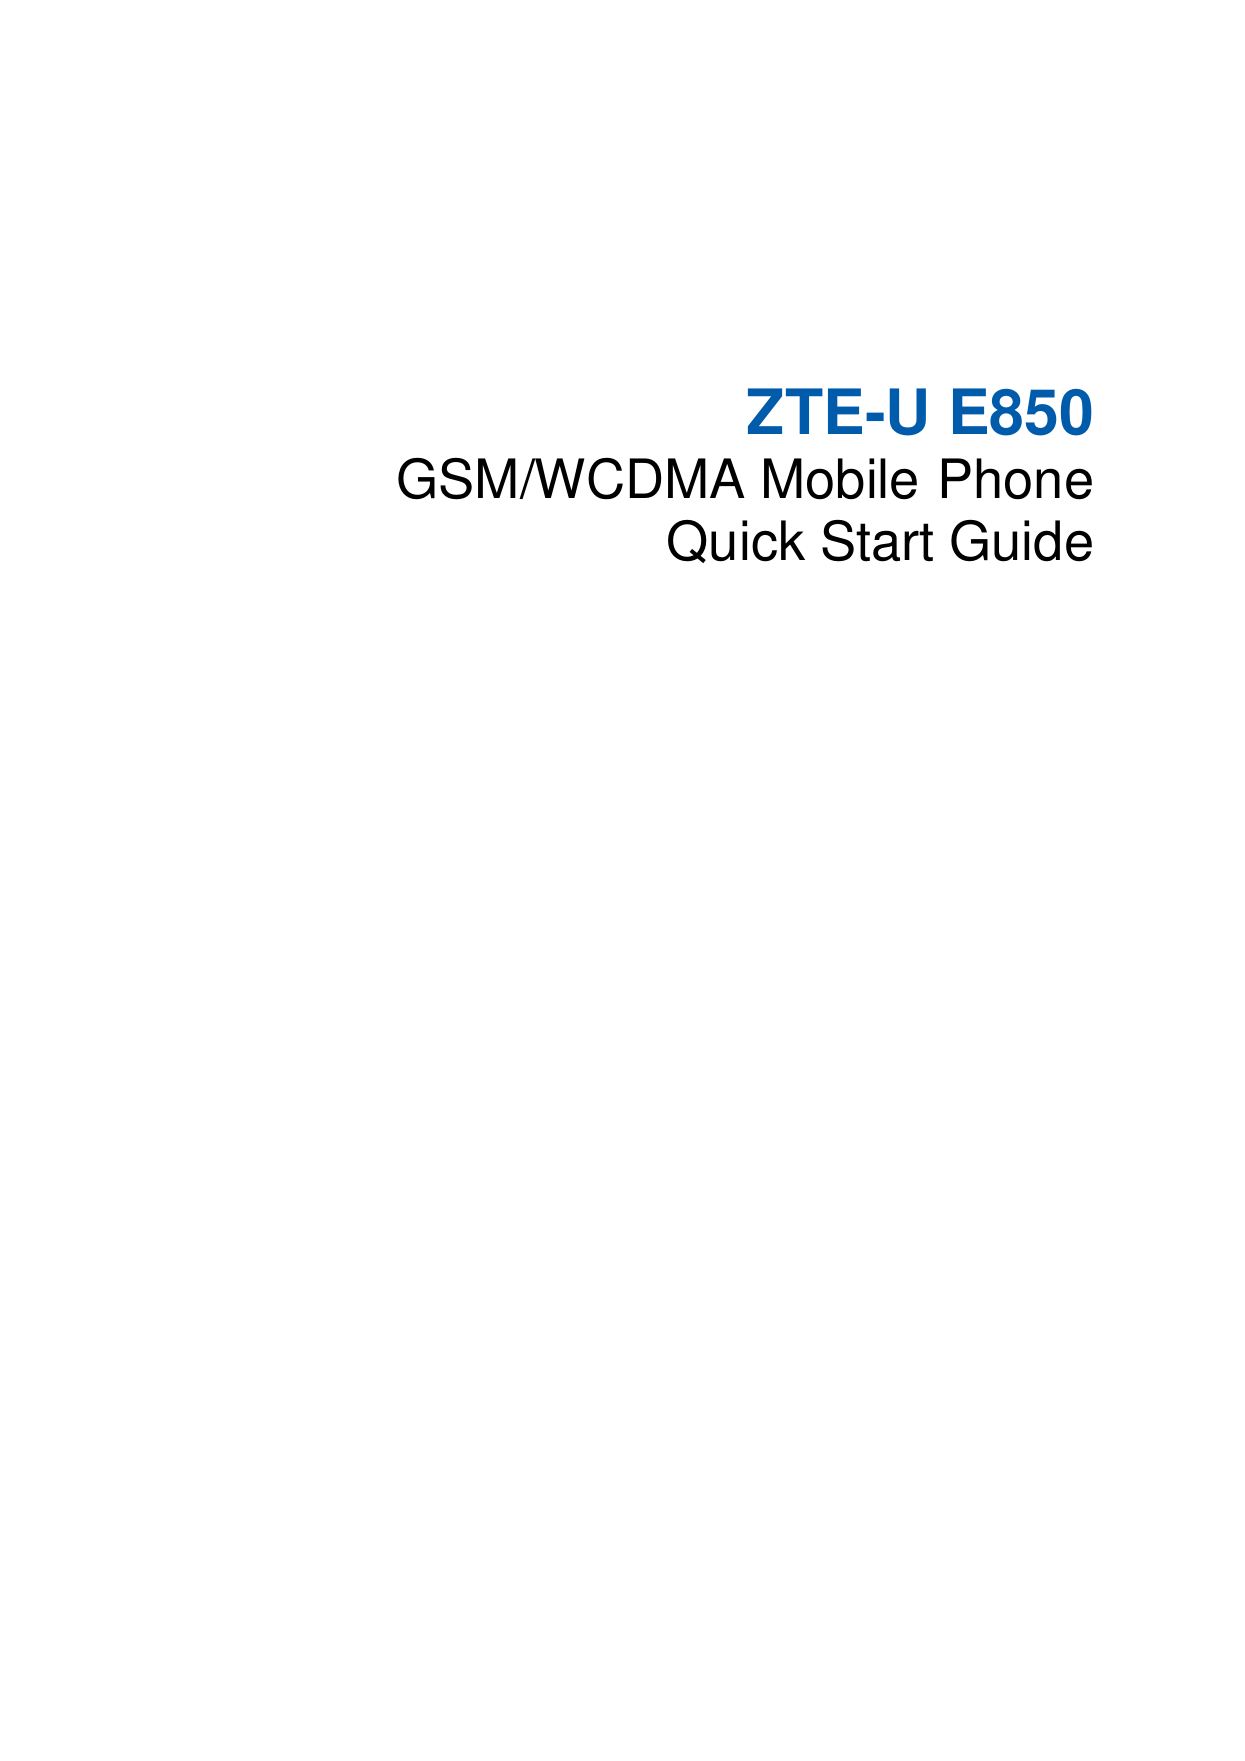   ZTE-U E850 GSM/WCDMA Mobile Phone Quick Start Guide          